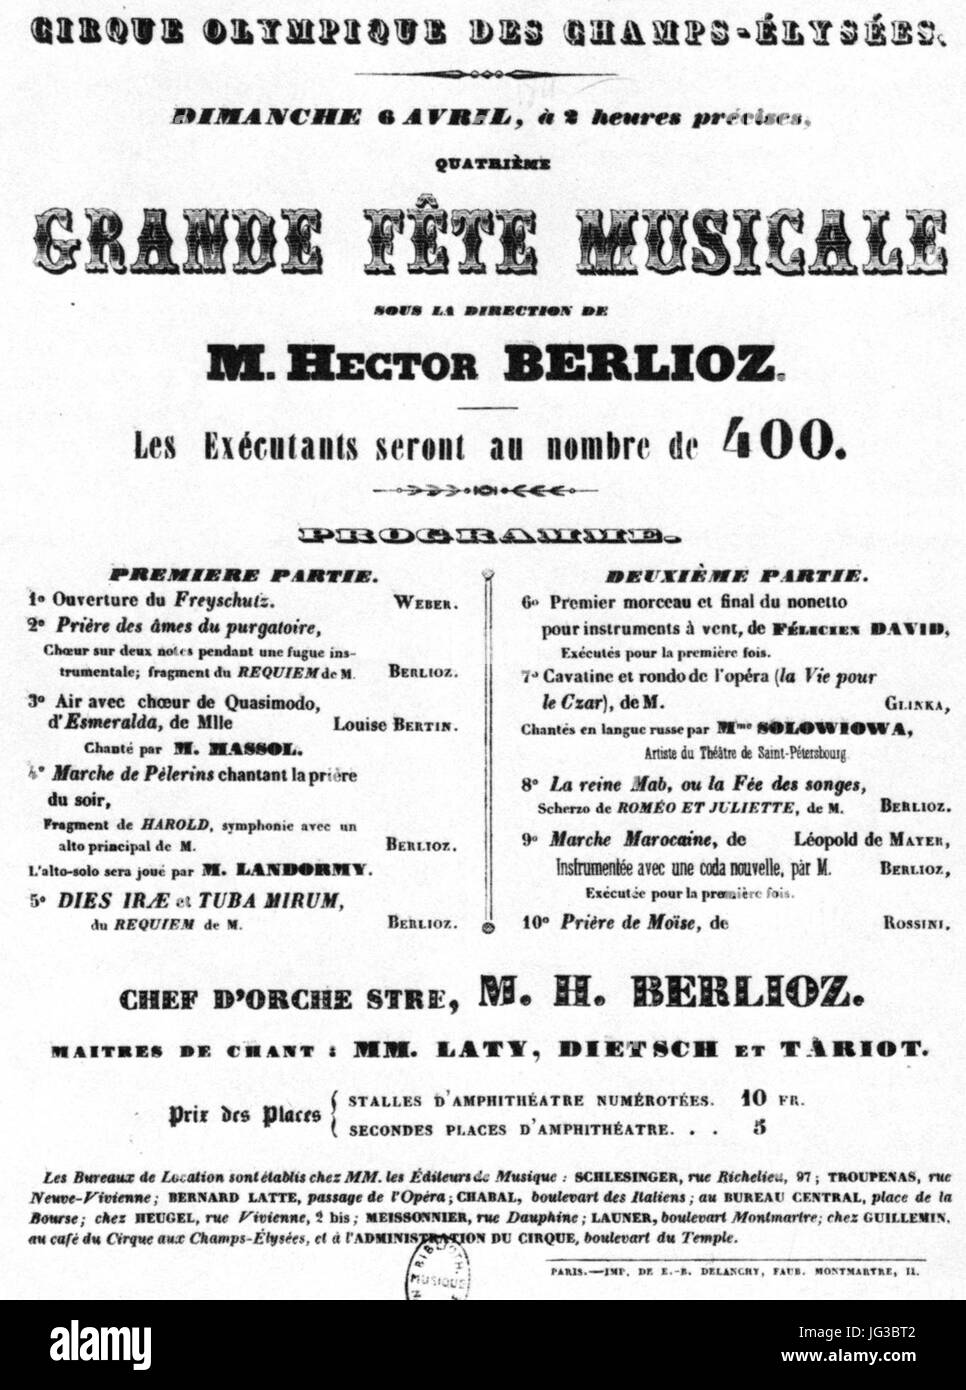 Per Handbill Berlioz concerto del 6 aprile 1845 presso il Cirque Olympique des Champs-Élysées - Holoman 1989p318 Foto Stock